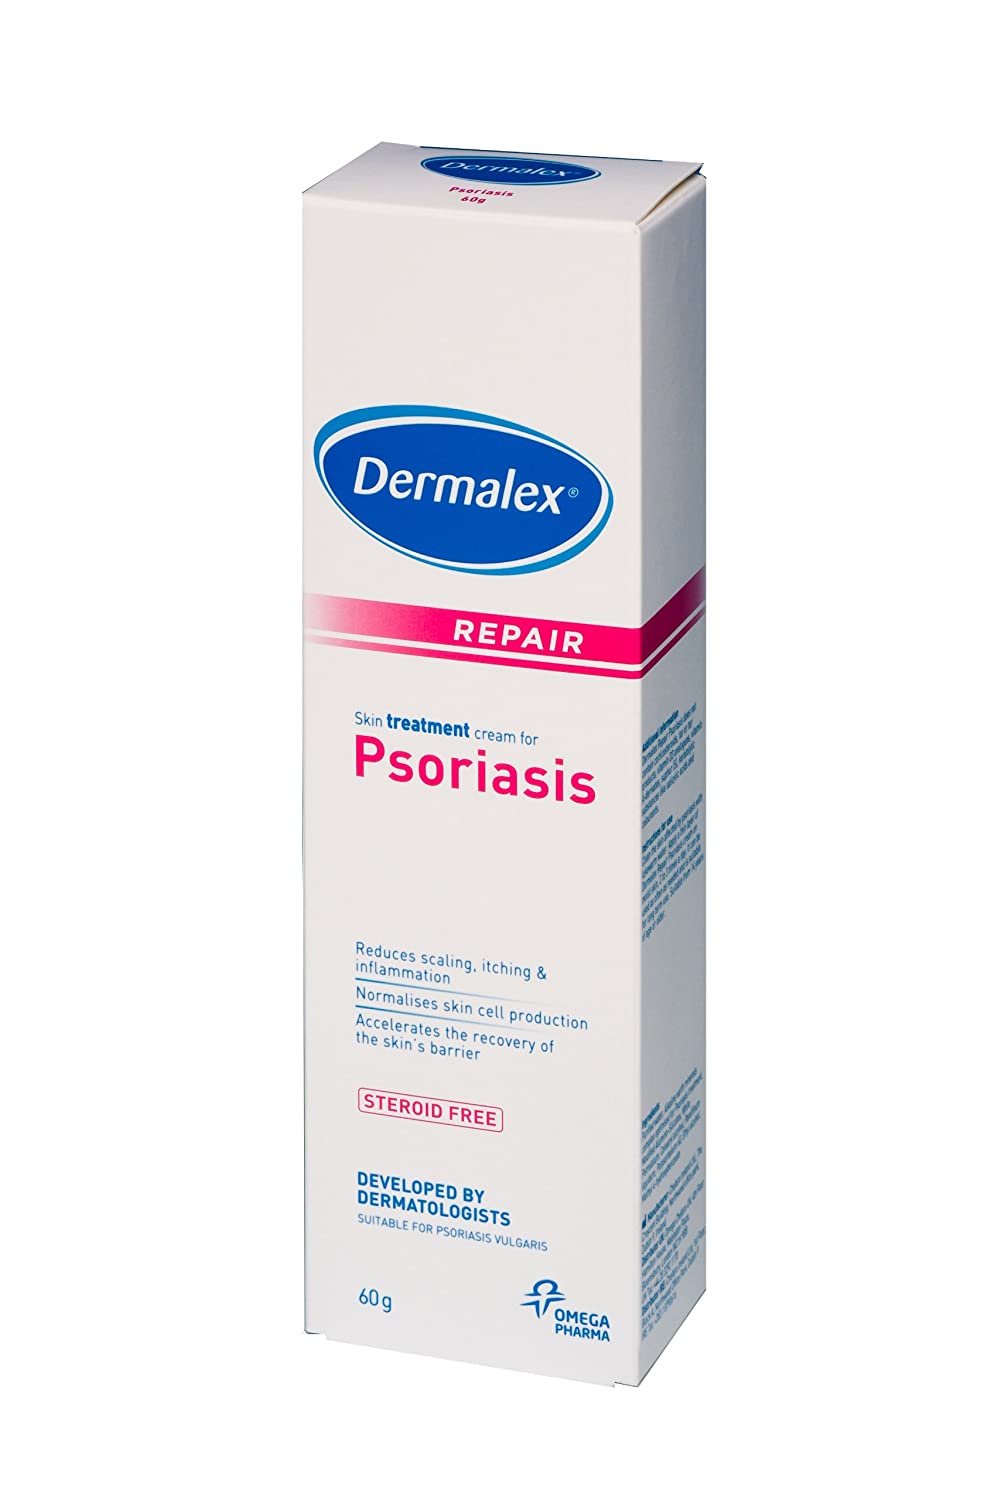 Dermalex Repair Skin Treatment Cream For Psoriasis Steroid Free